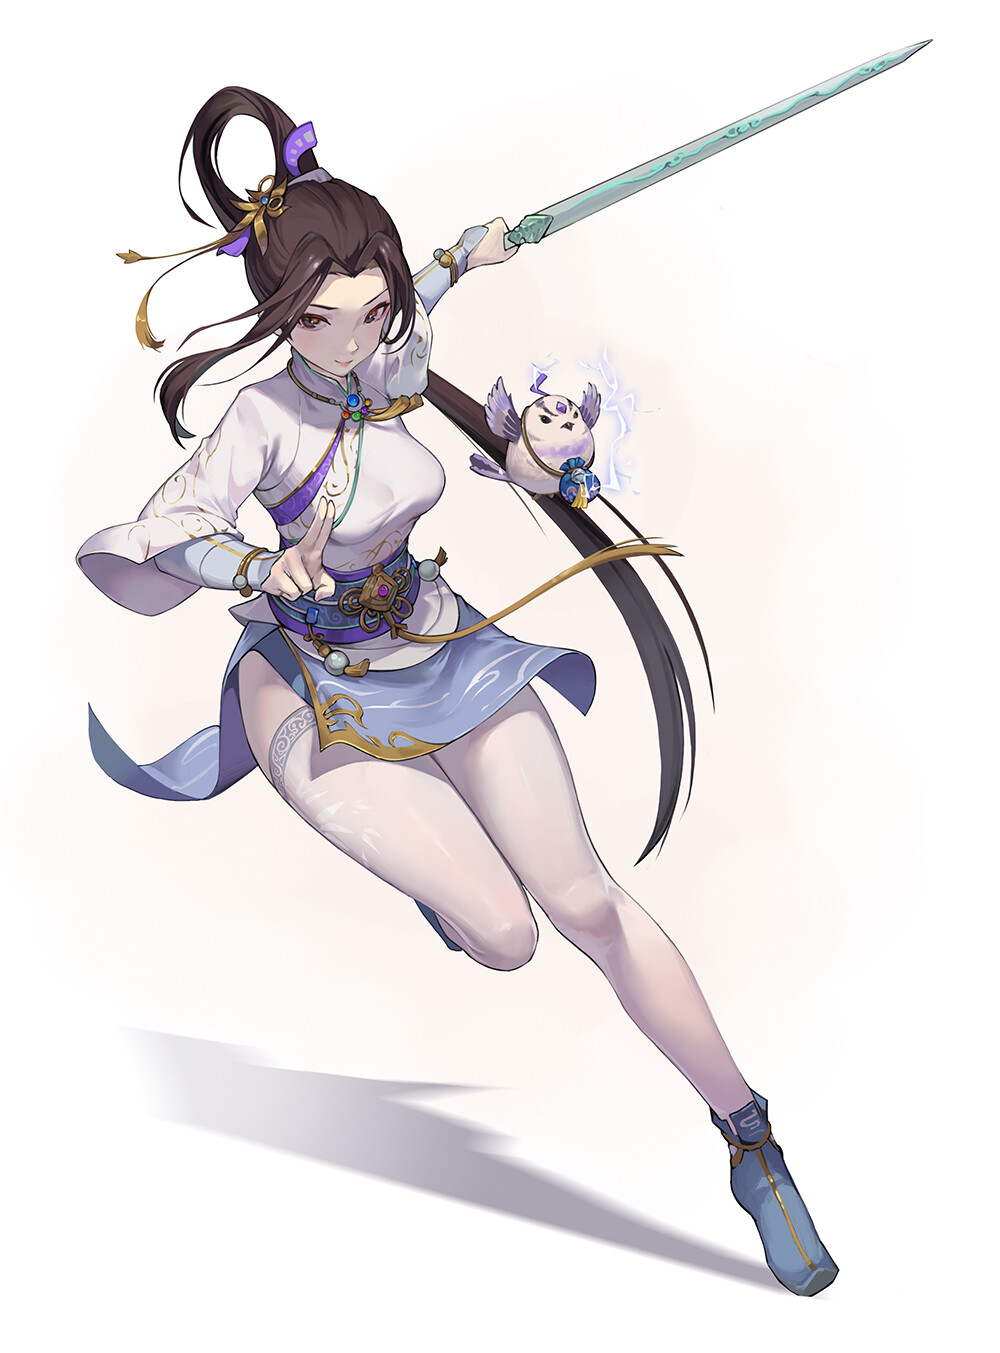 Anime 1000x1353 anime anime girls brunette long hair sword women with swords legs dress white background simple background Chinese dress thigh-highs artwork ShopP